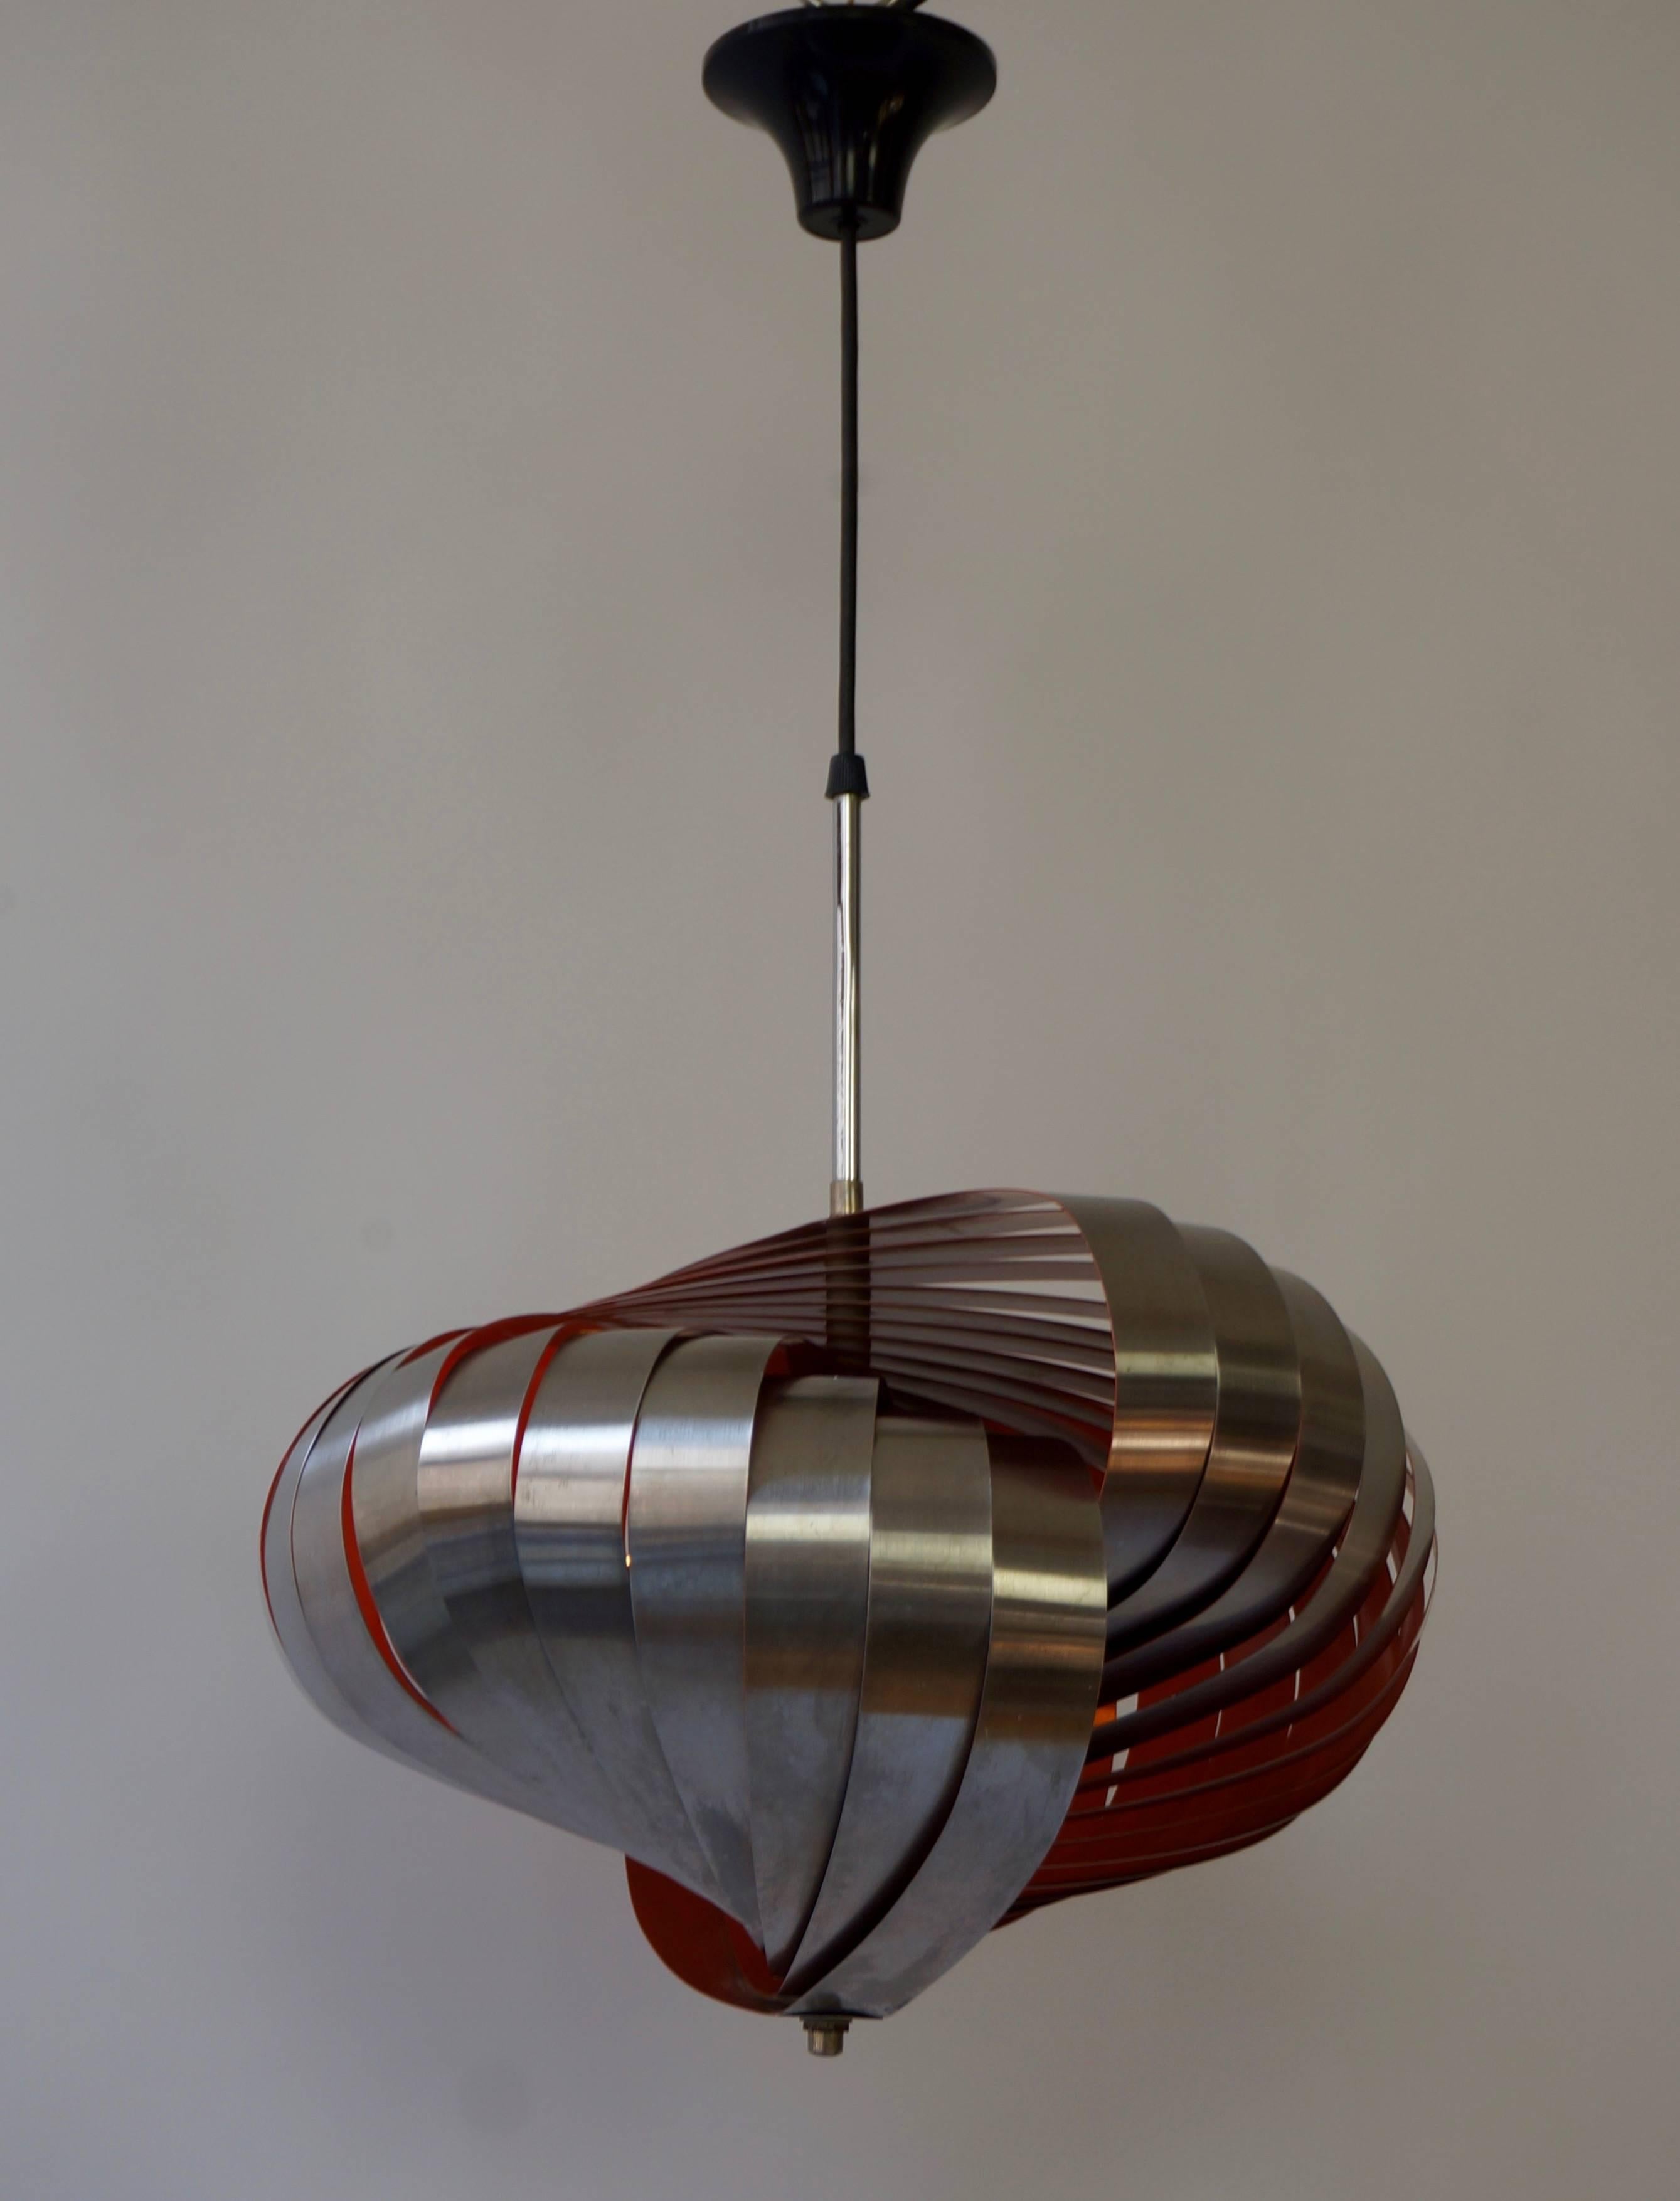 Louis Weisdorf sculptural ceiling light.
Measures: Diameter 40 cm.
Height 25 cm.
Total height 70 cm.